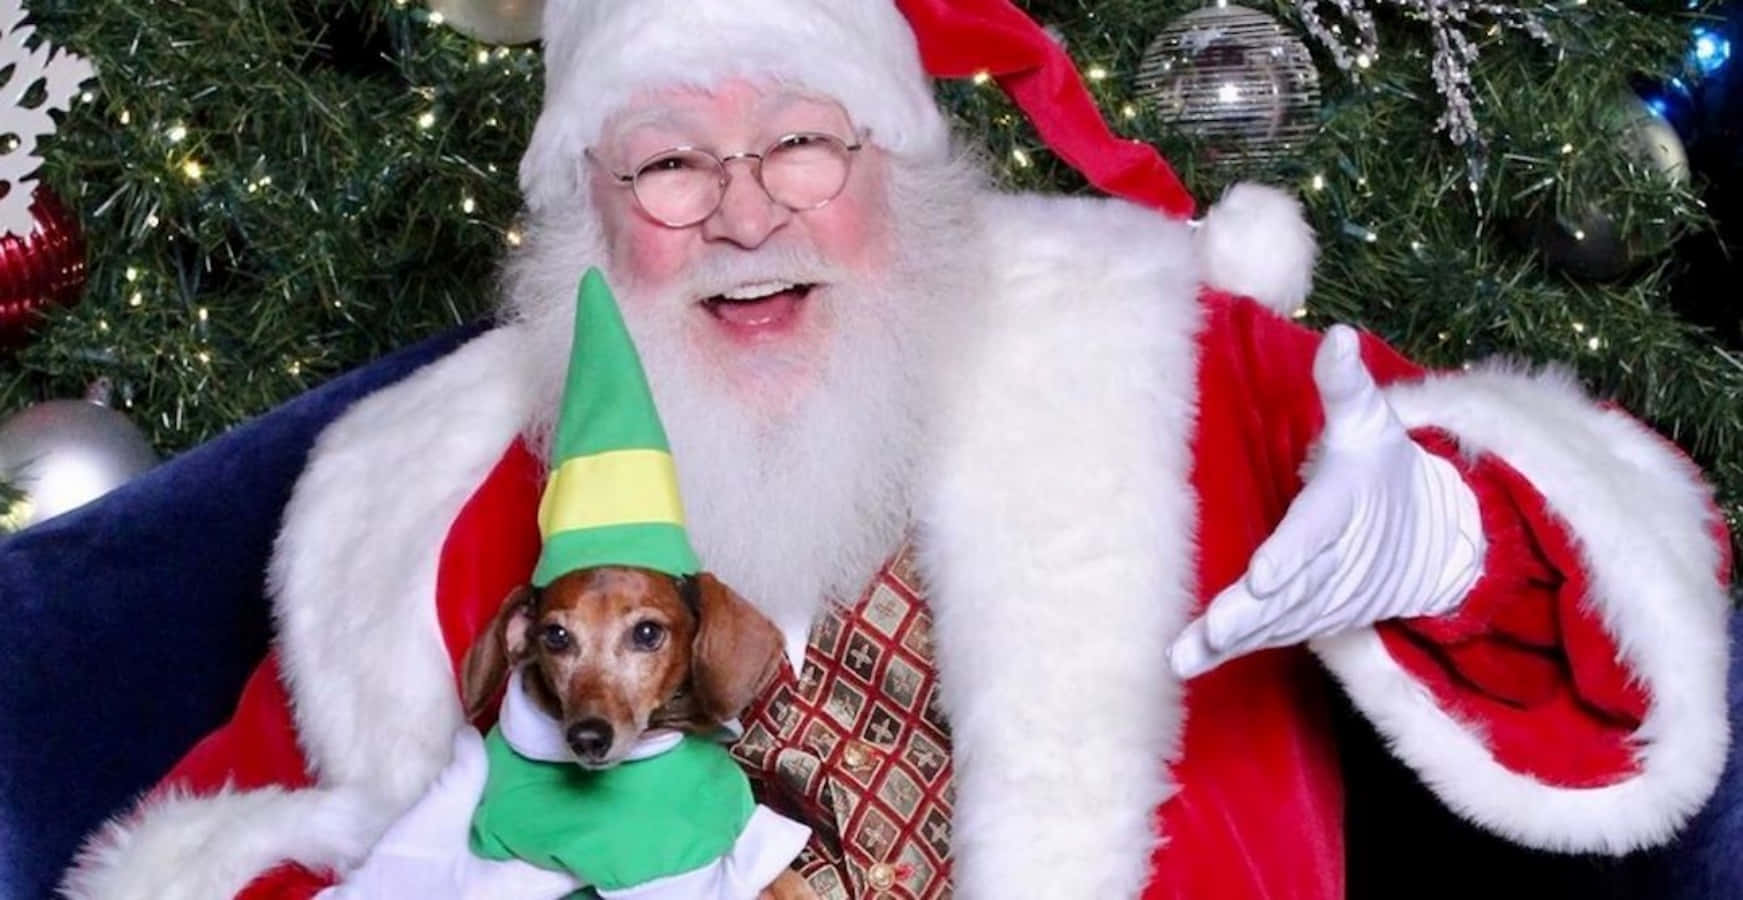 Adorable Dog Dressed as Santa Claus